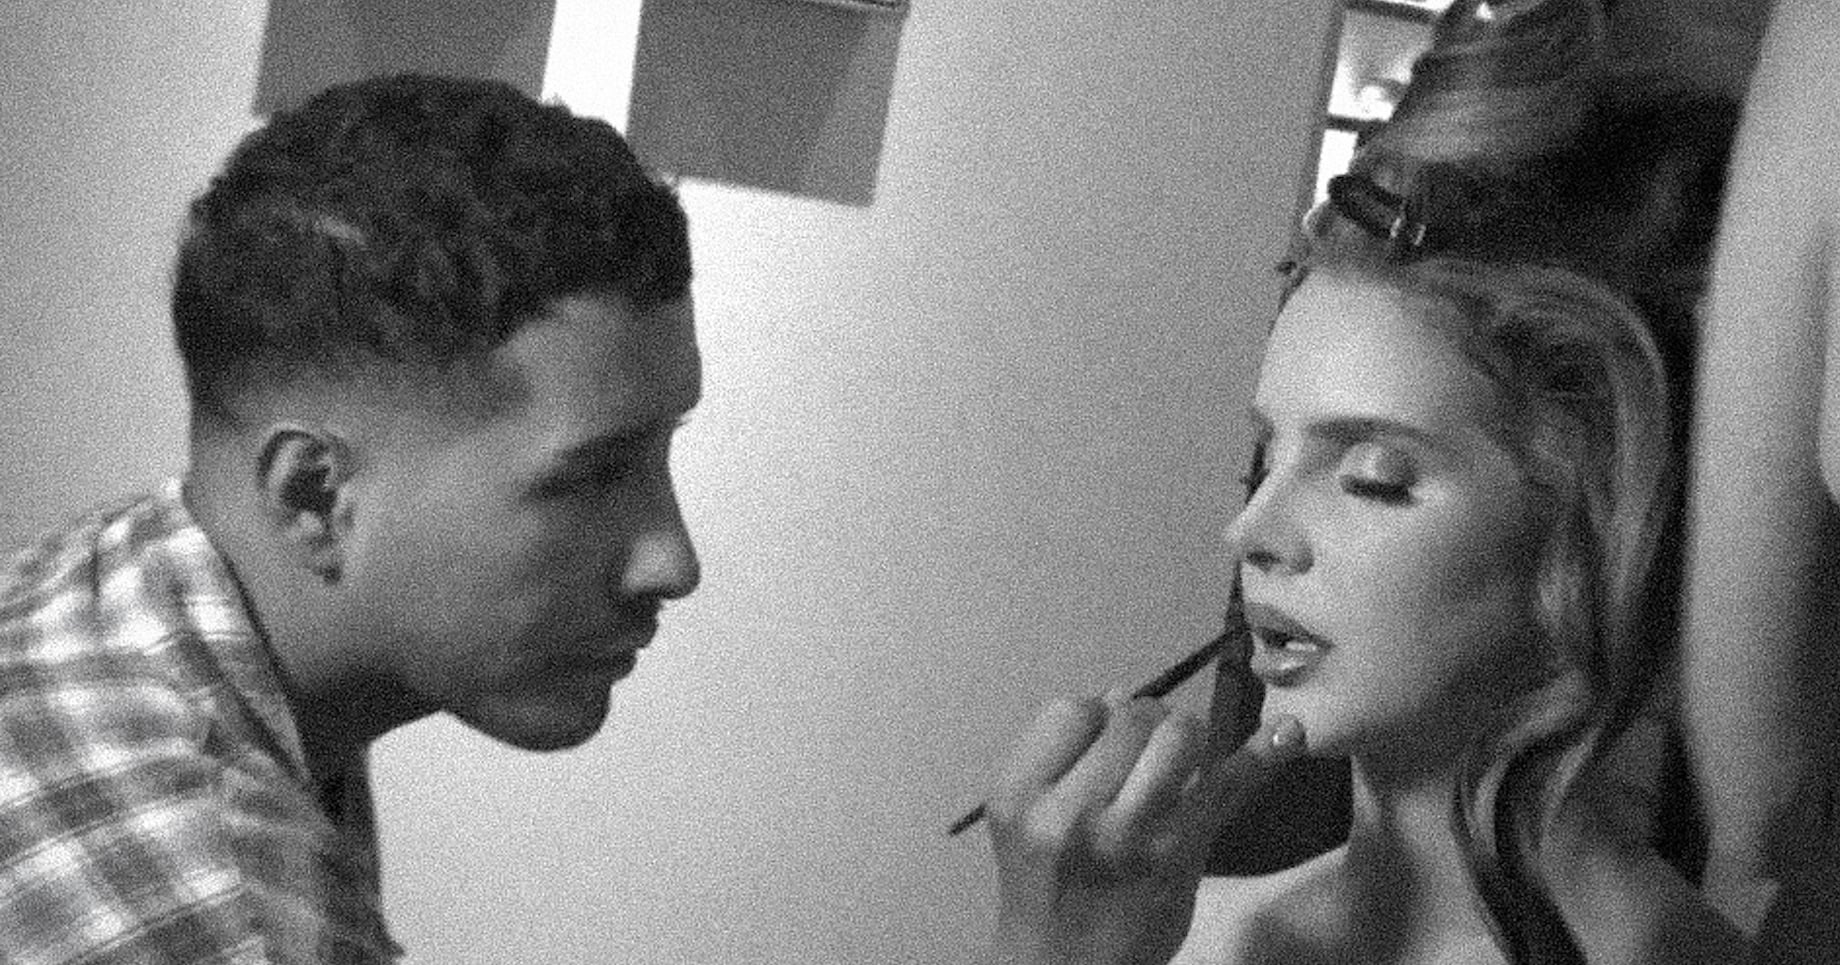 Lana Del Rey’s Makeup Artist Etienne Ortega Shares His Tips